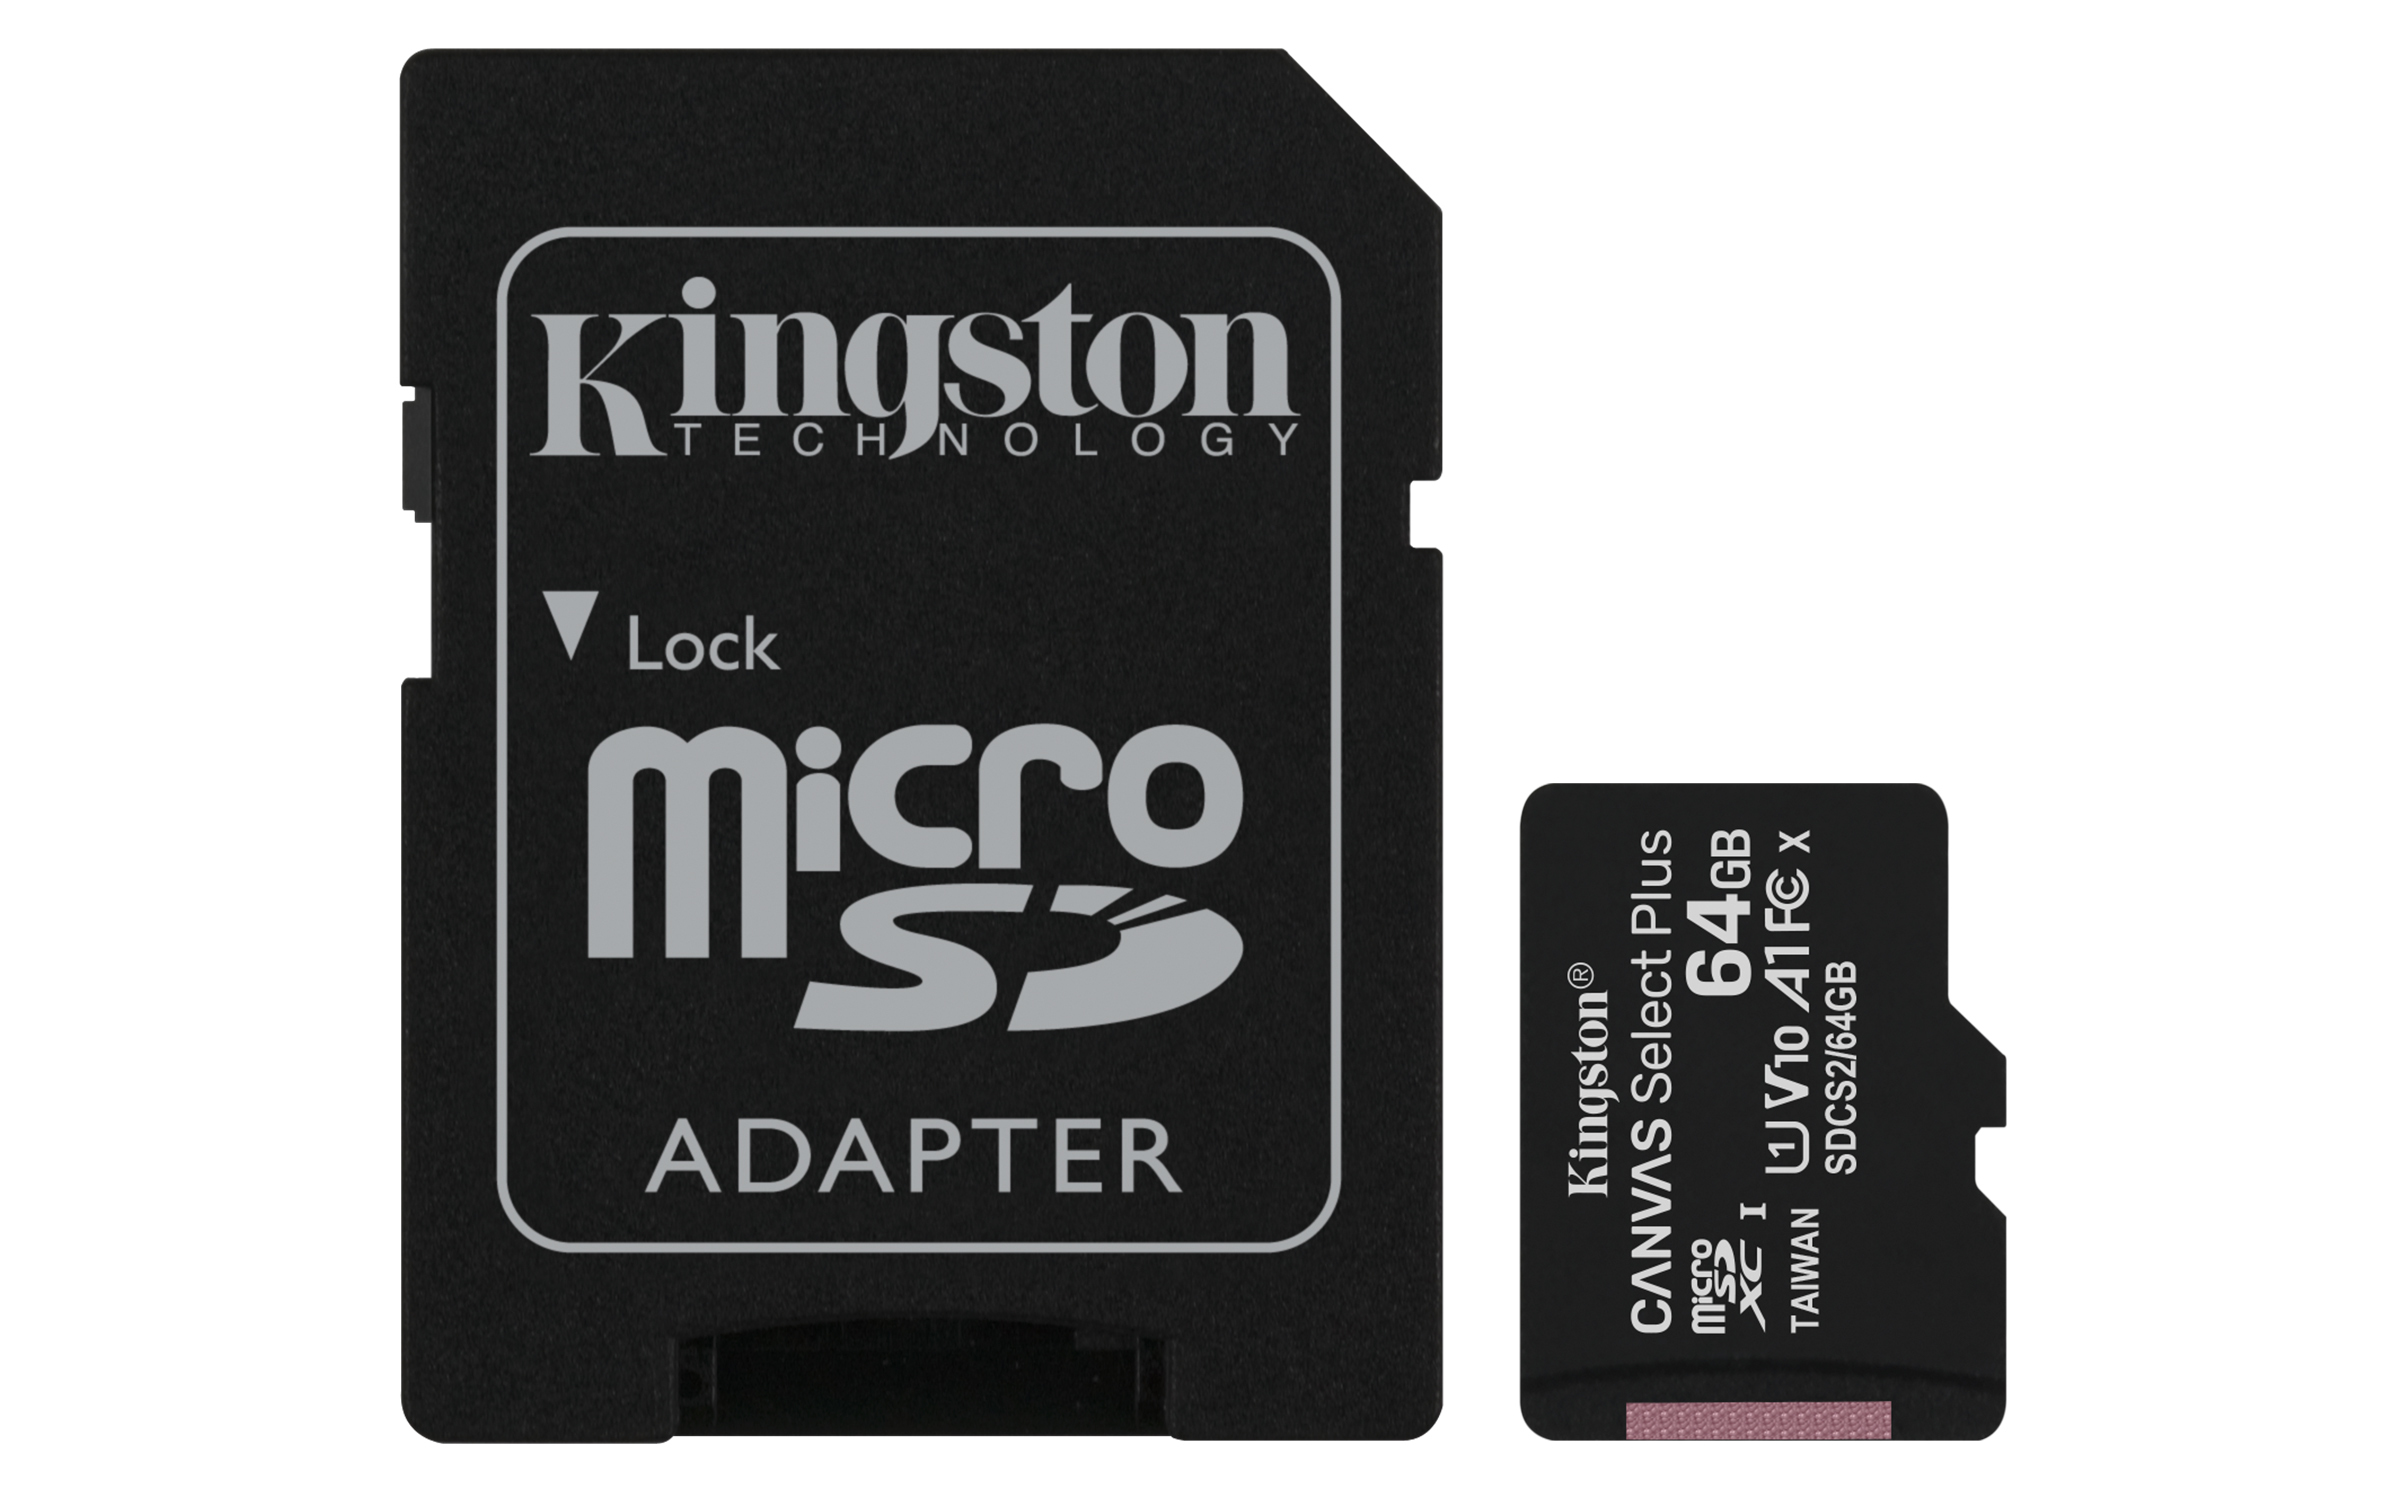 MICRO SD KINGSTON CANVAS PLUS 64GB HC 10